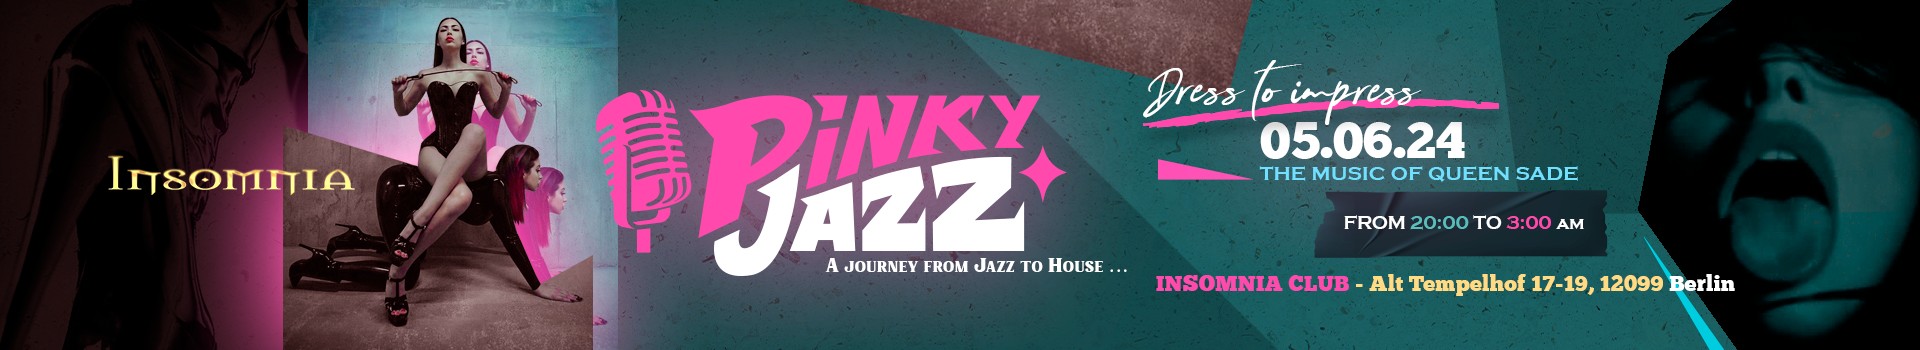 Pinky Jazz - Путешествие из джаза в хаус